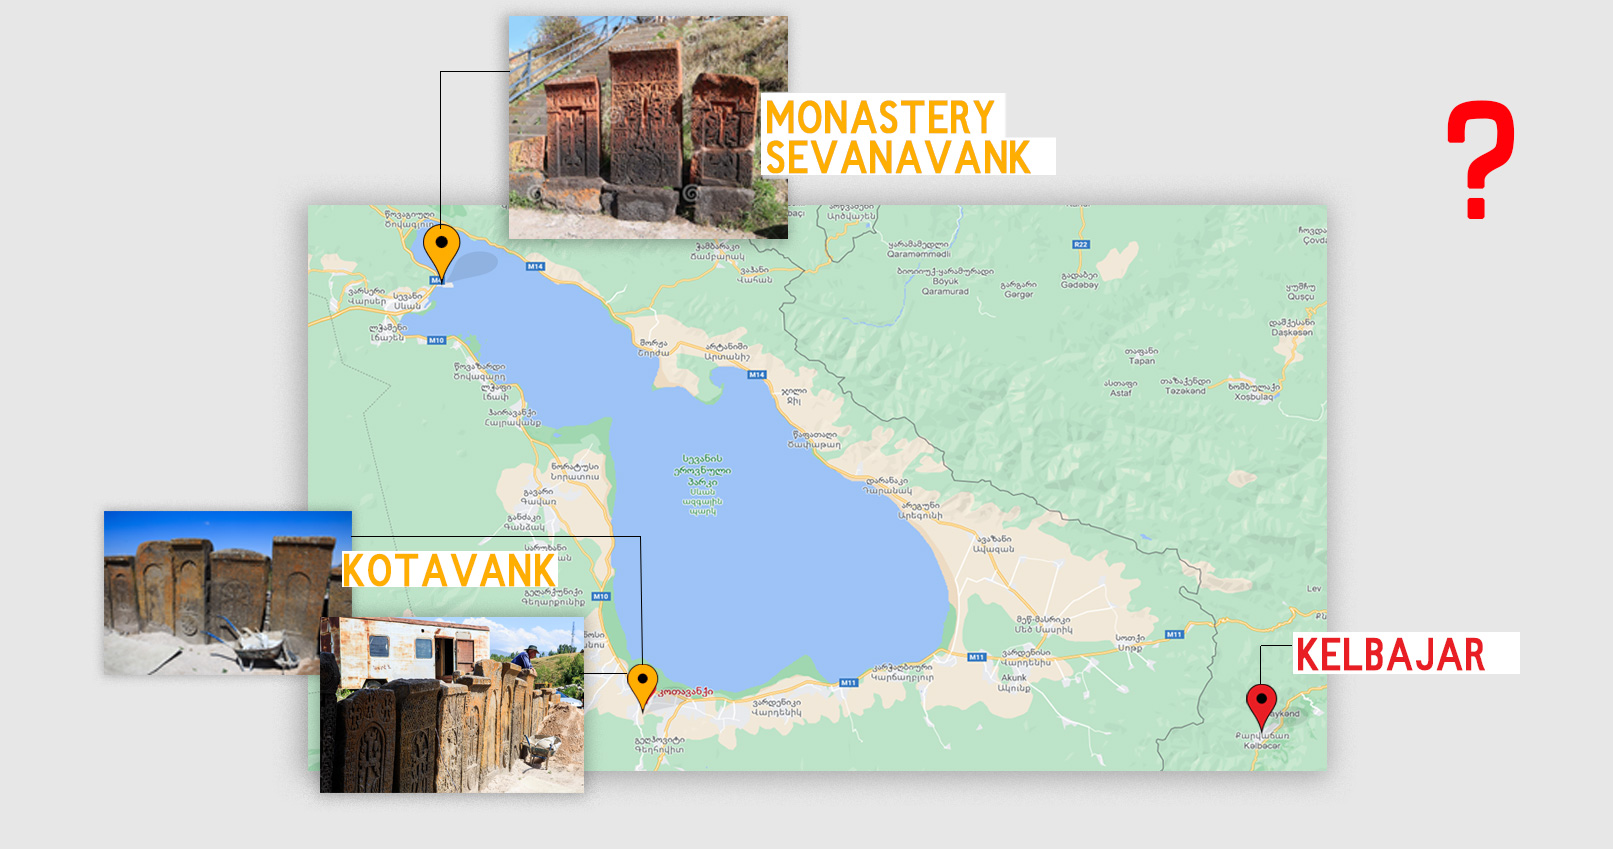 Where were the photos of the cemetery taken – at Sevan, near Kotavank or Kalbajar district controlled by Azerbaijan?